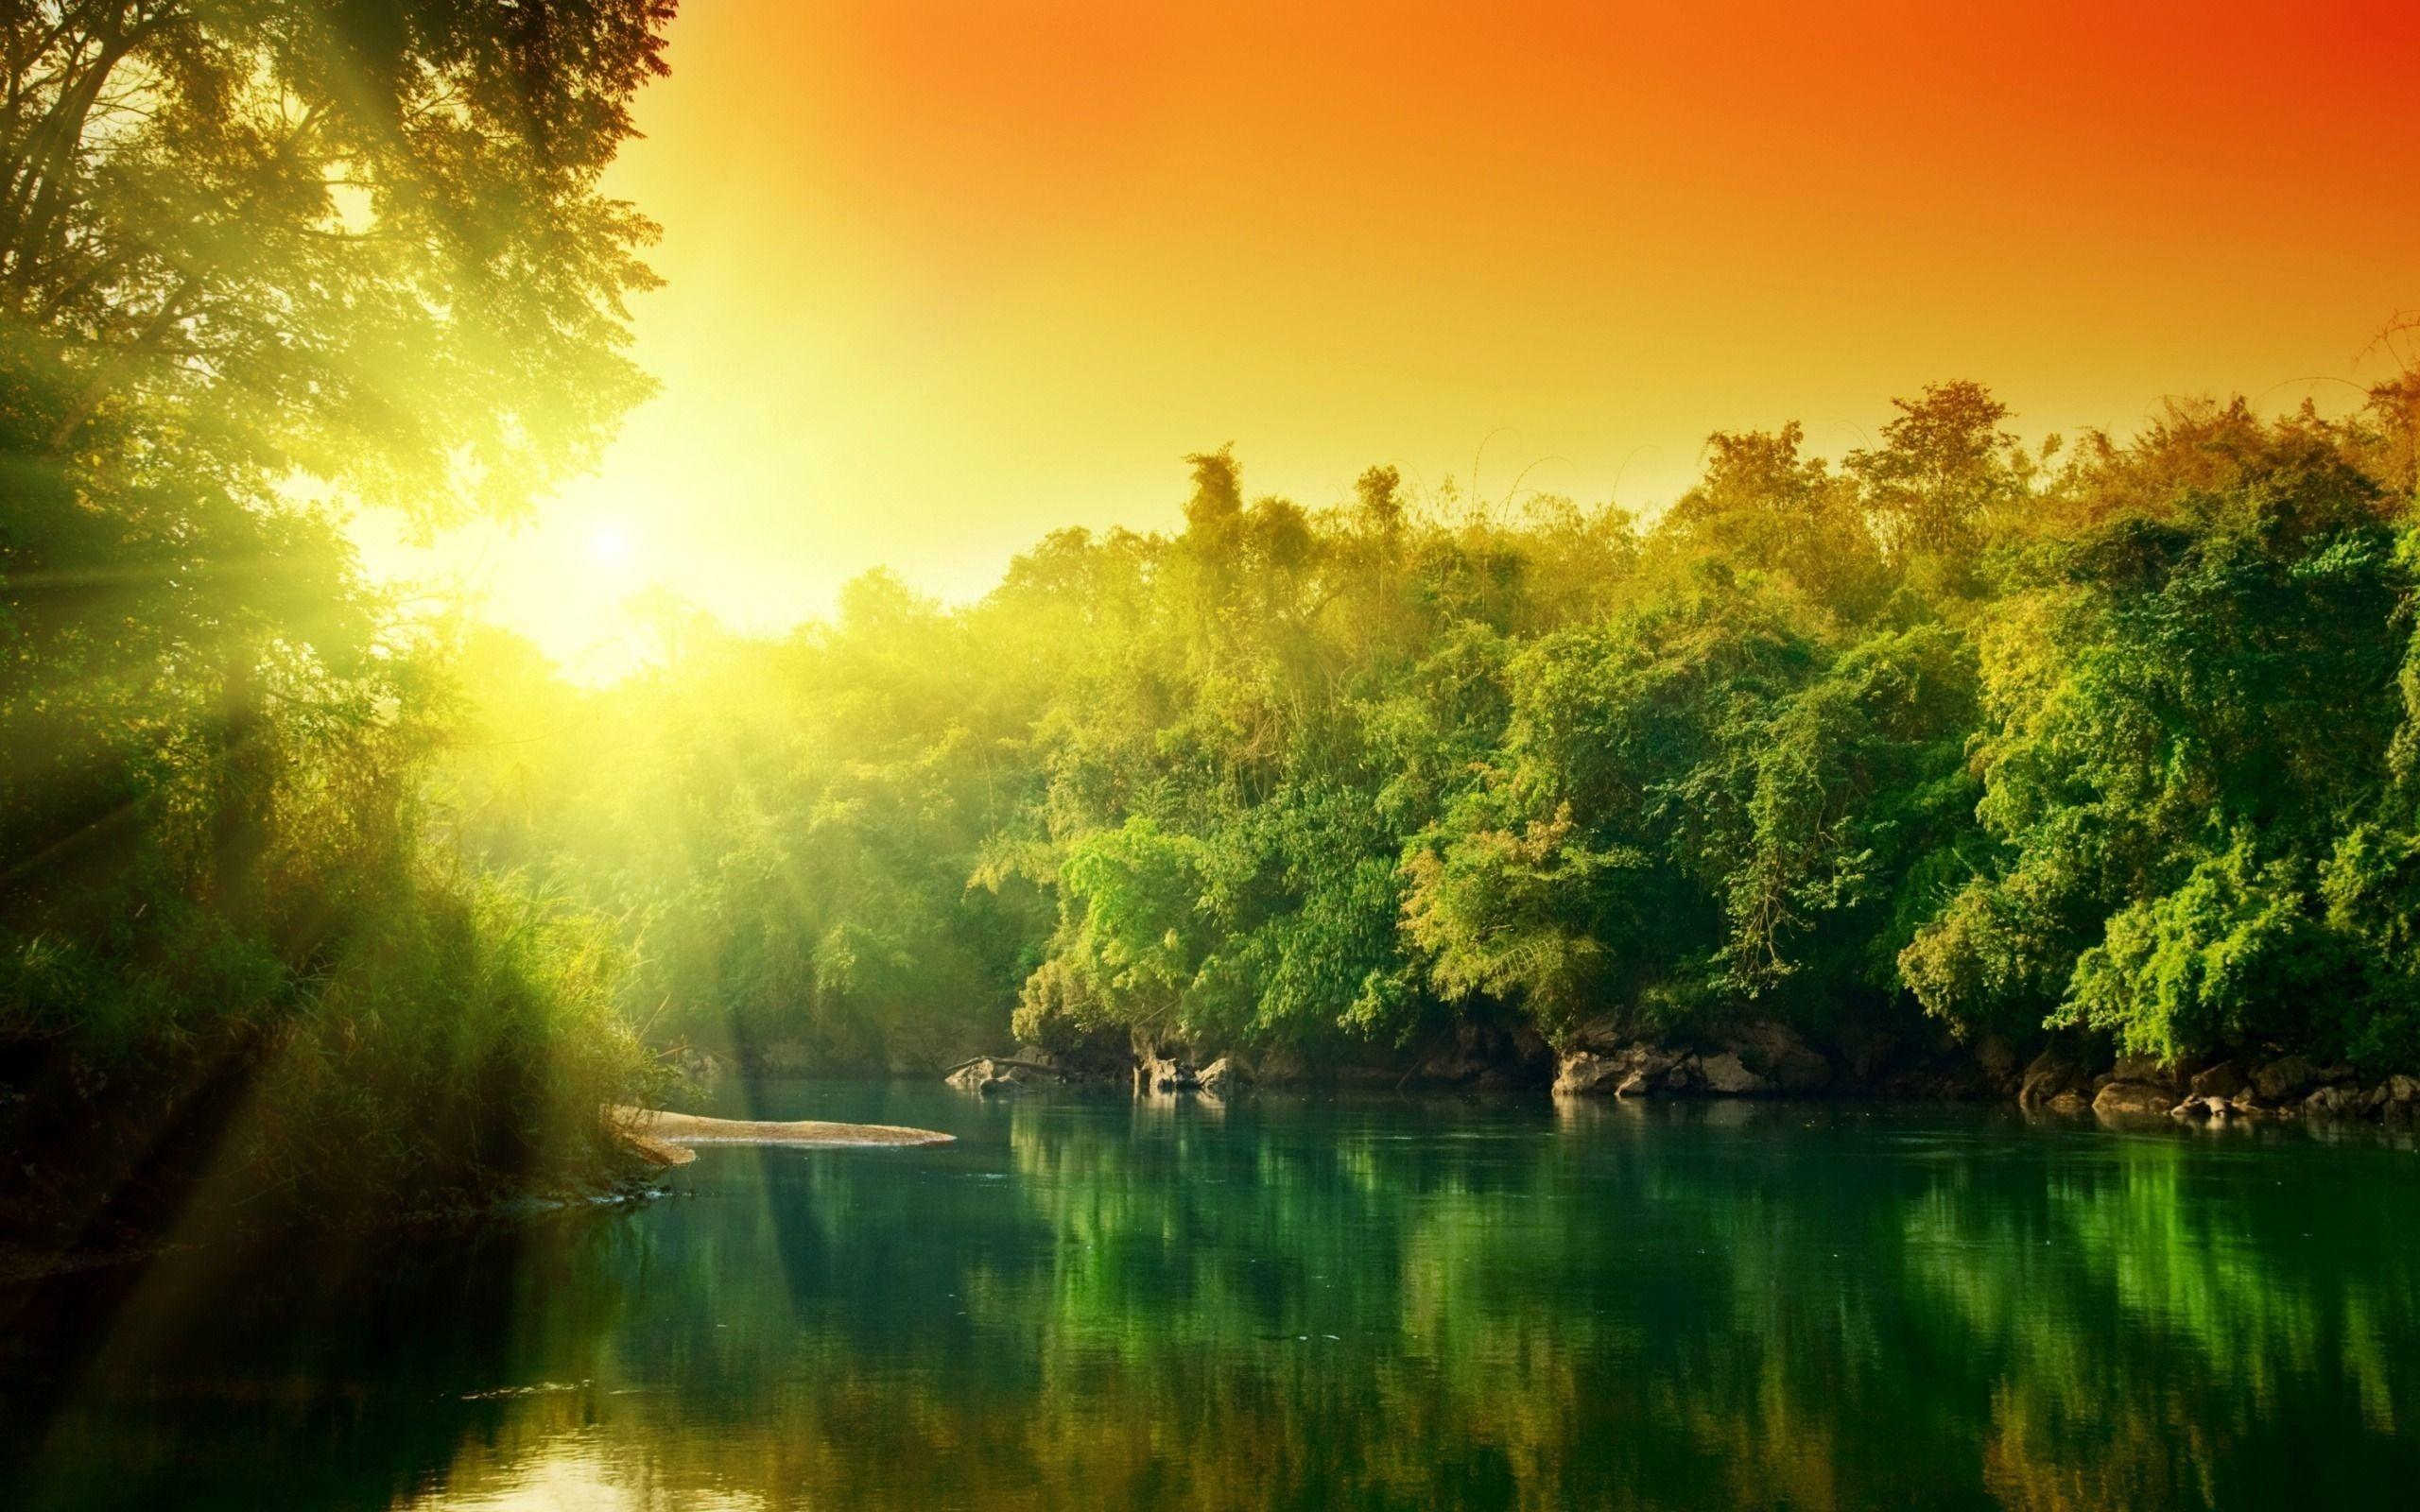 Amazon Rainforest Wallpaper background picture